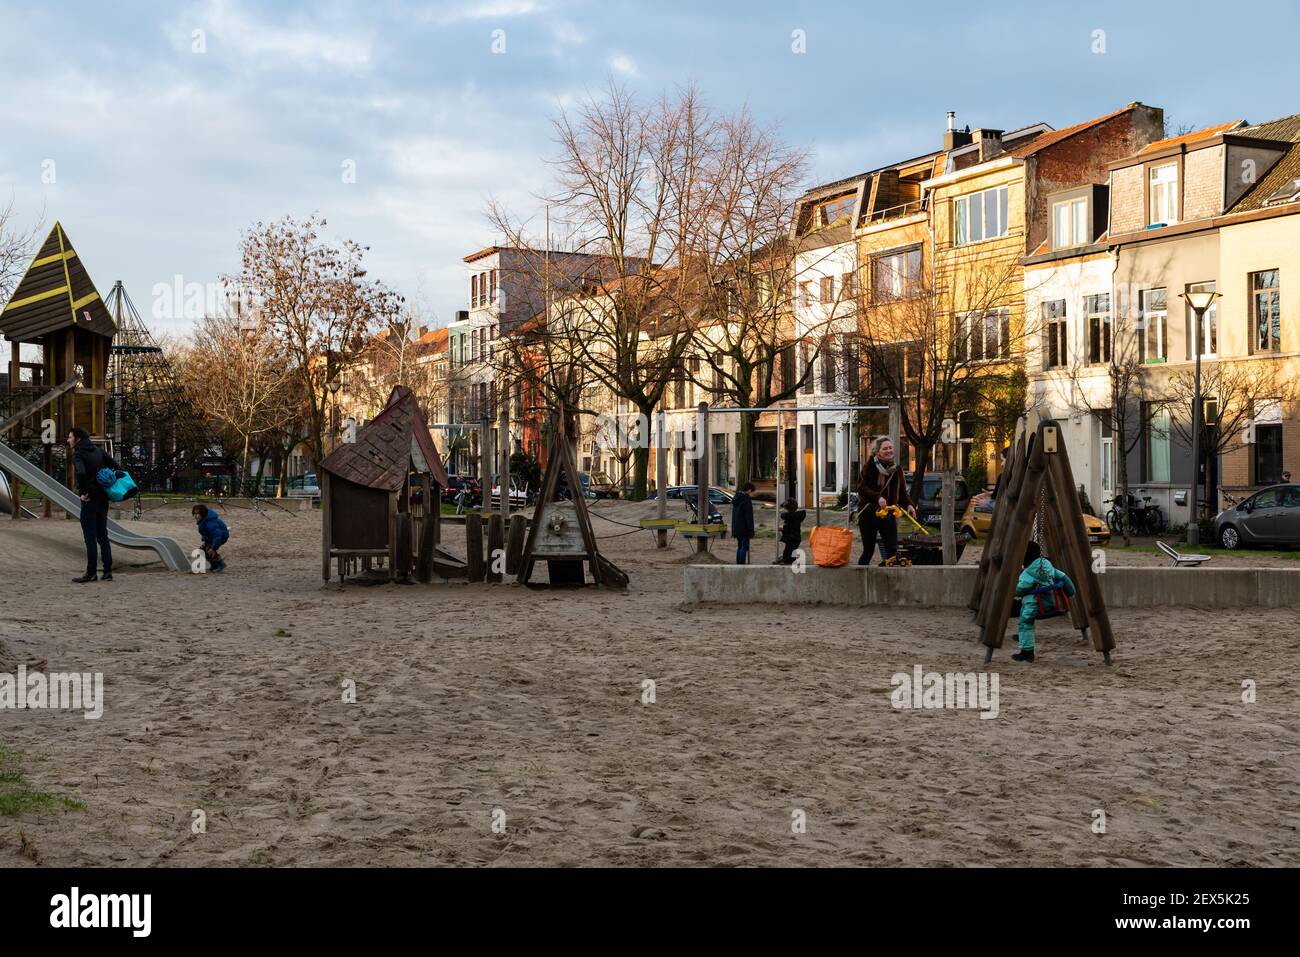 Antwerp, Flanders - Belgium - 12 28 2020: Public children playground in a residential area with low, golden sunlight Stock Photo